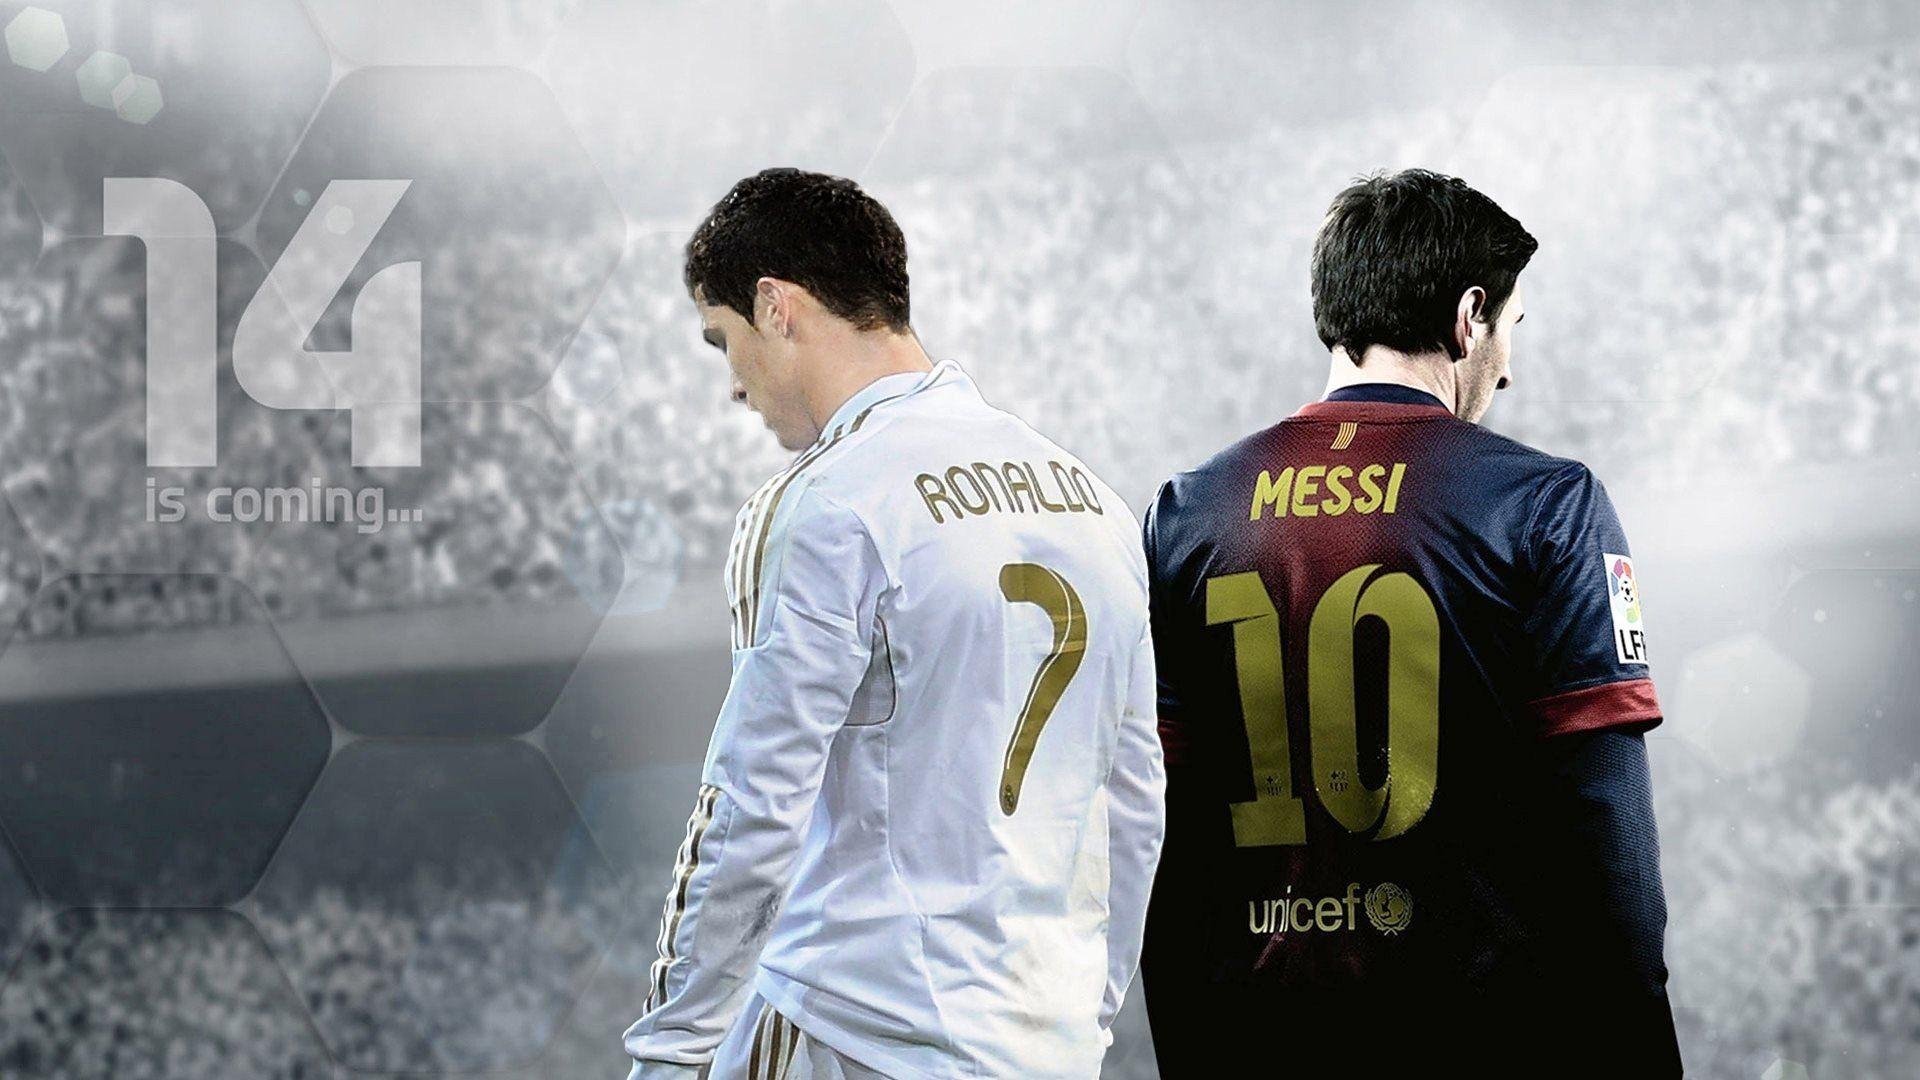 Cristiano Ronaldo HD Wallpaper and Background Image